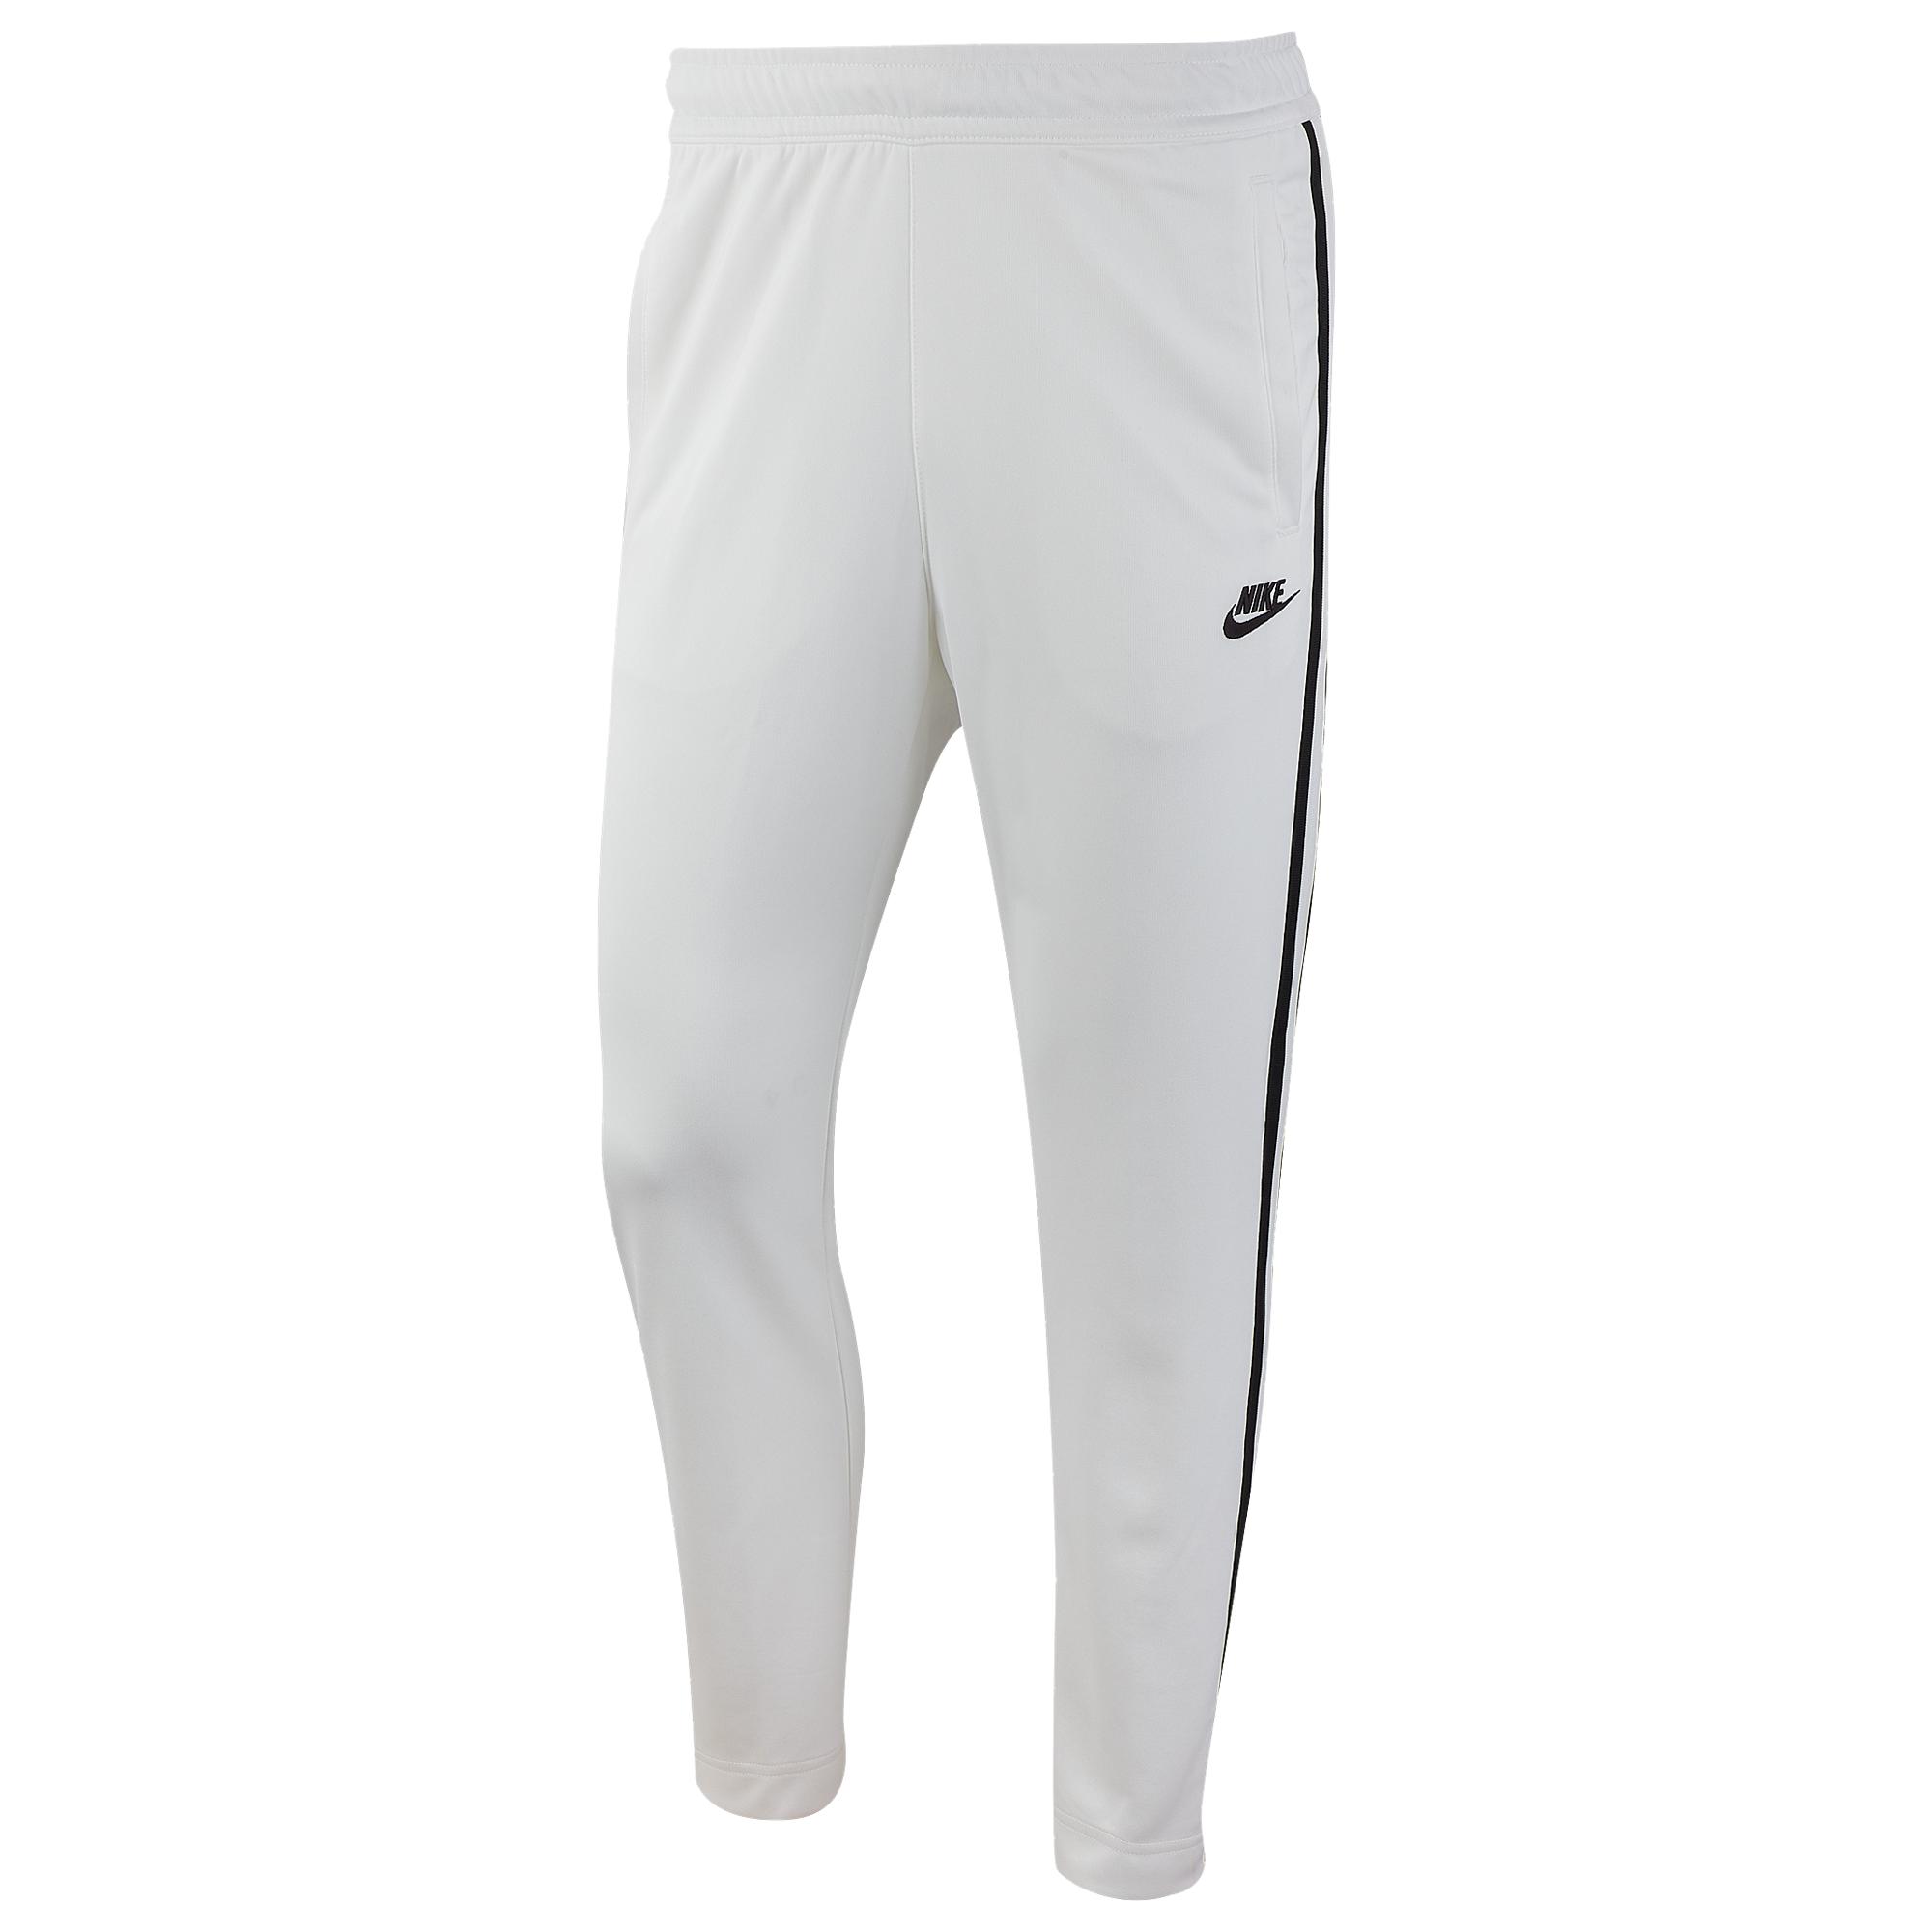 Nike Sportswear Tribute N98 Warm Up Pants In White Black White For Men Lyst